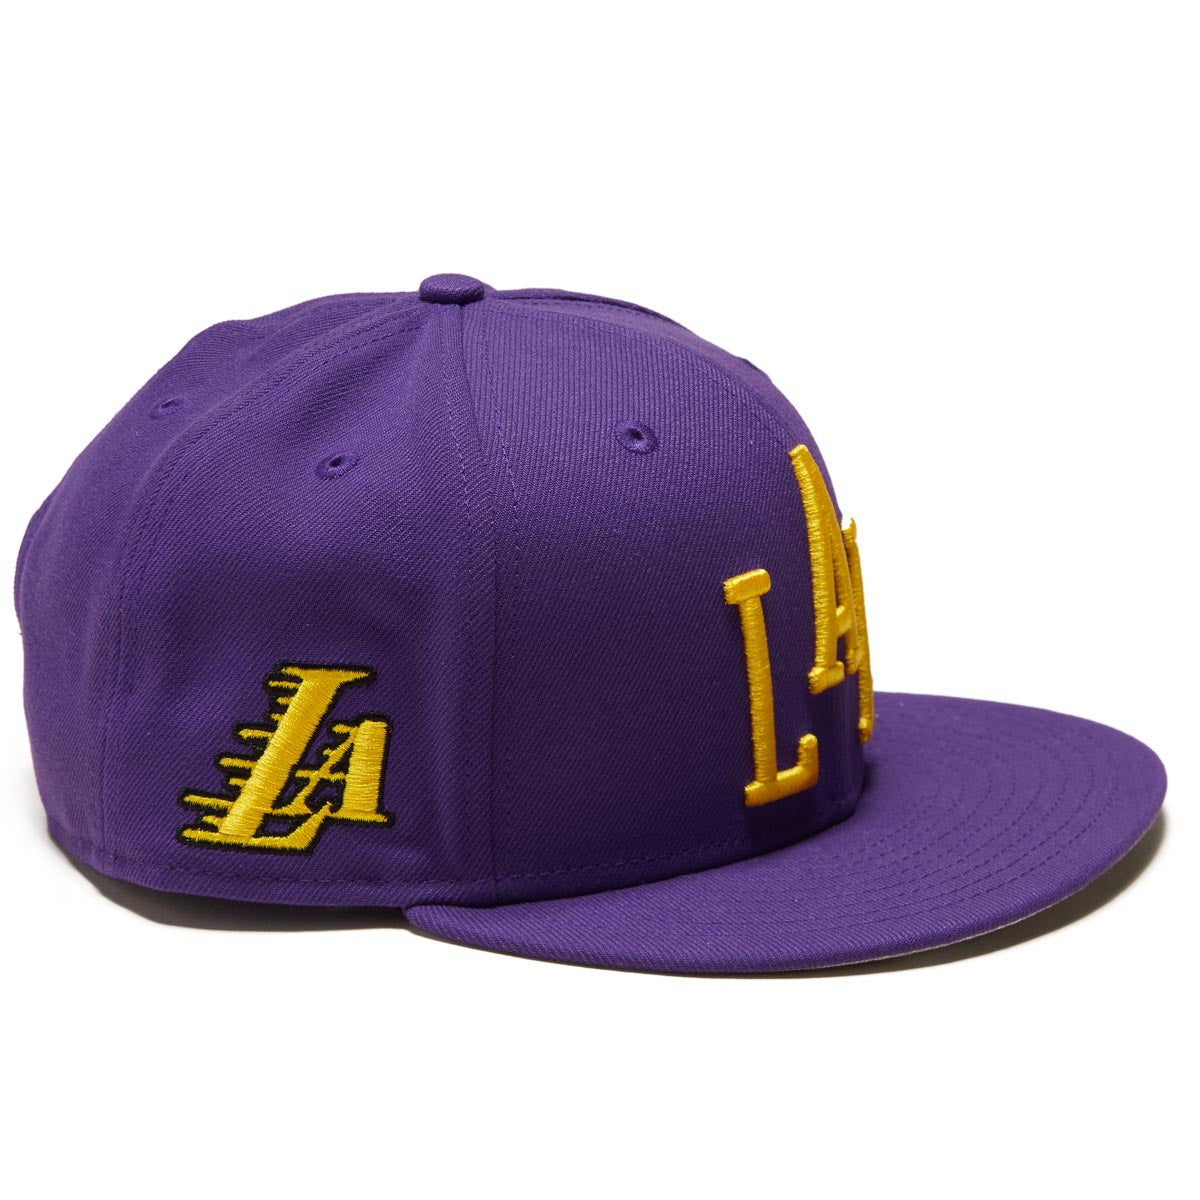 New Era x NBA 950 ALT 23 Los Angeles Lakers Hat - Purple image 3